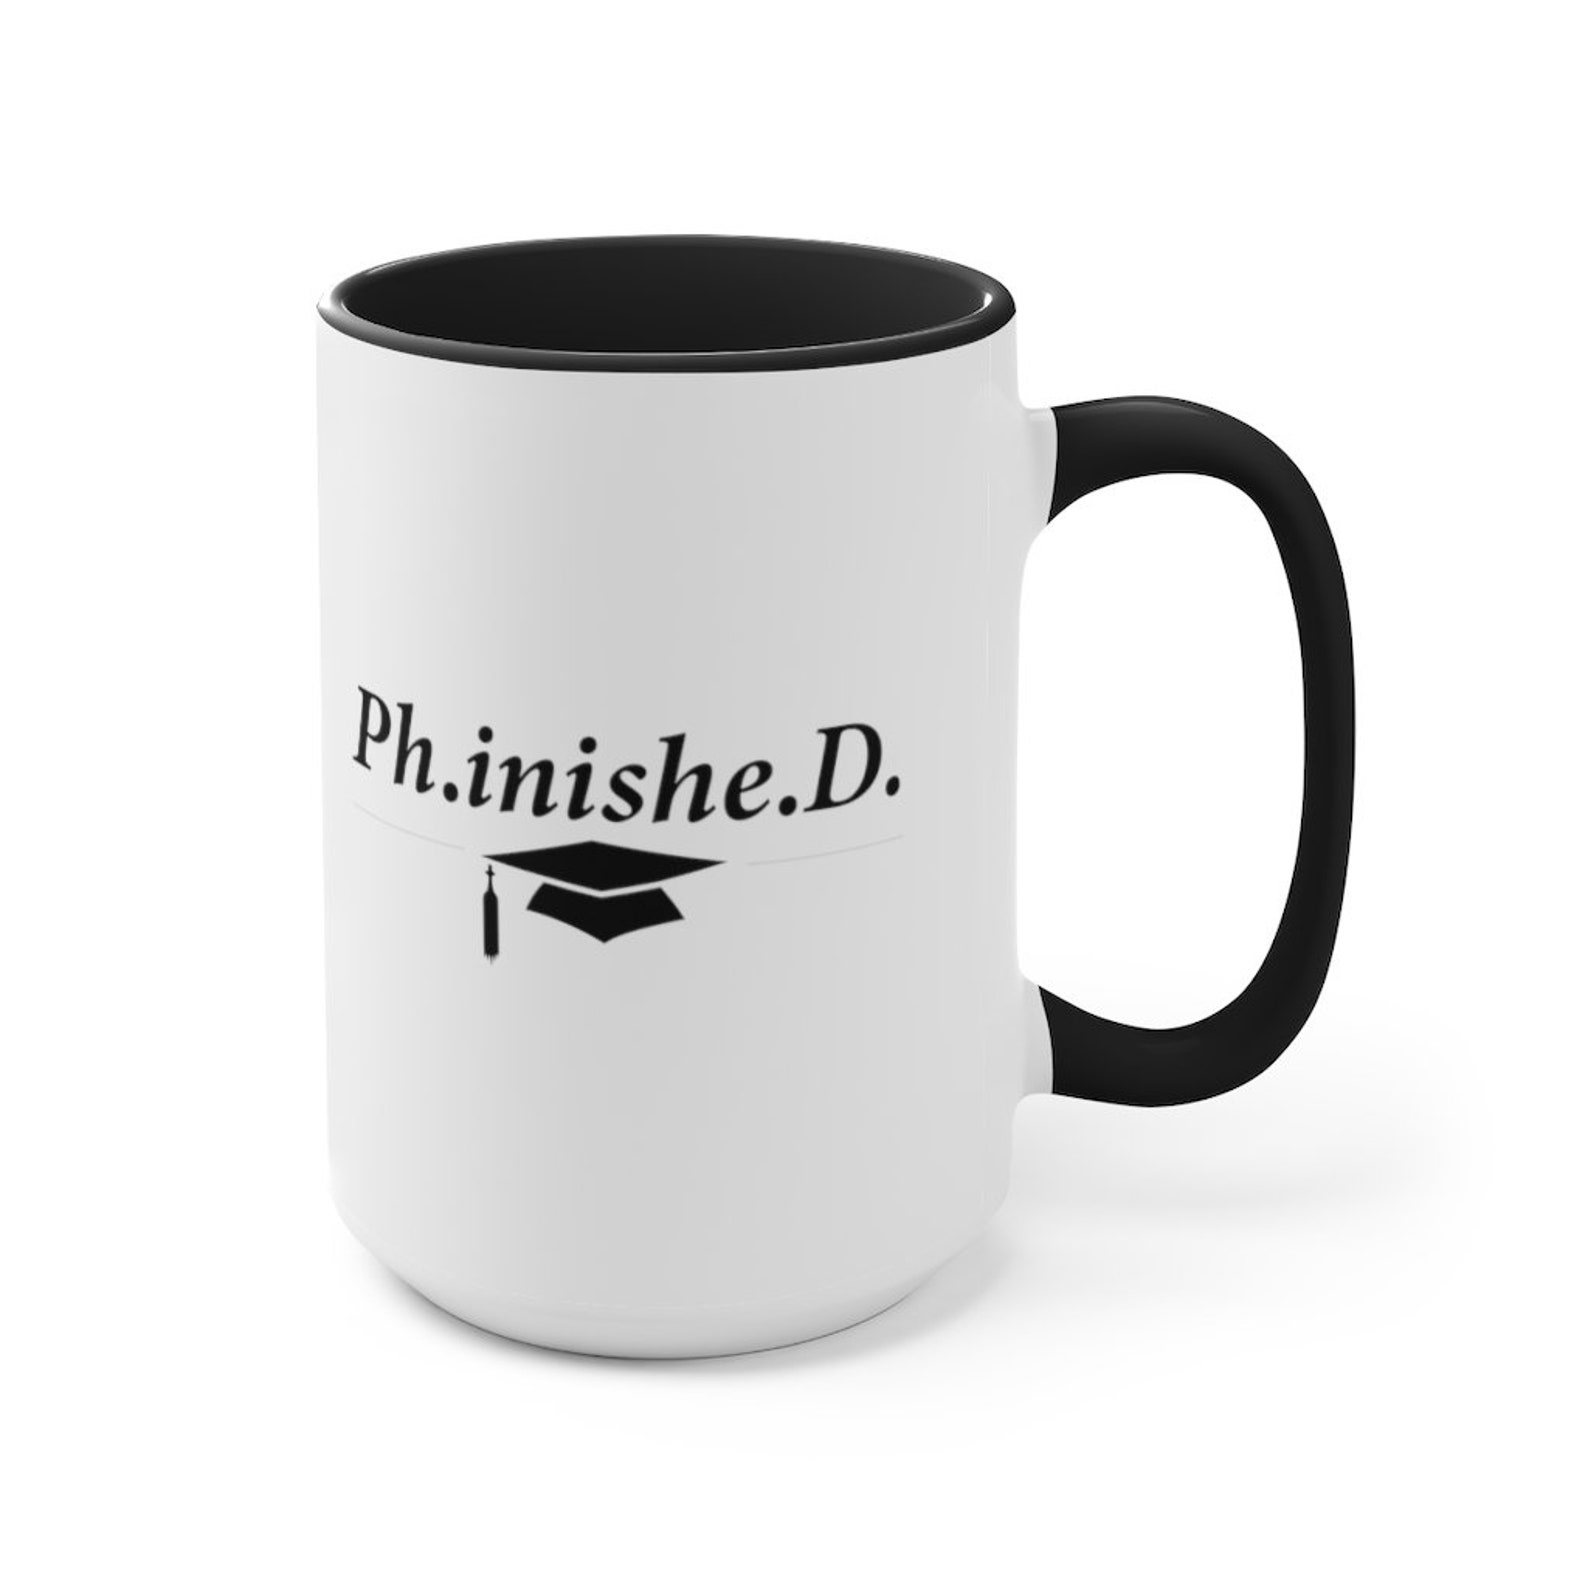 phd supervisor mug